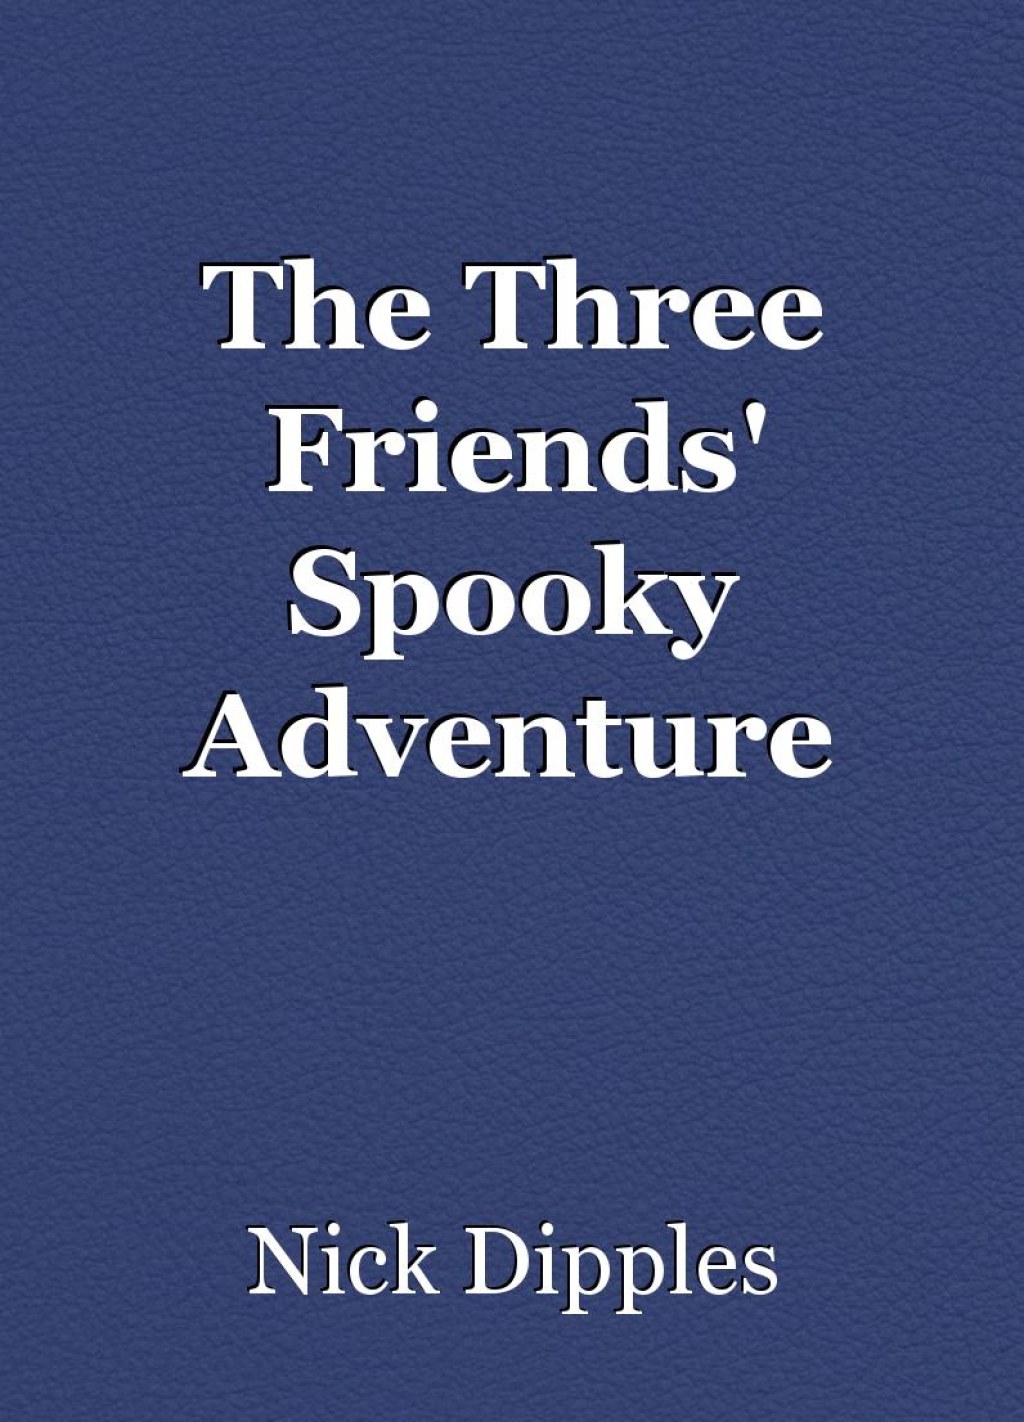 adventure story of three friends - The Three Friends